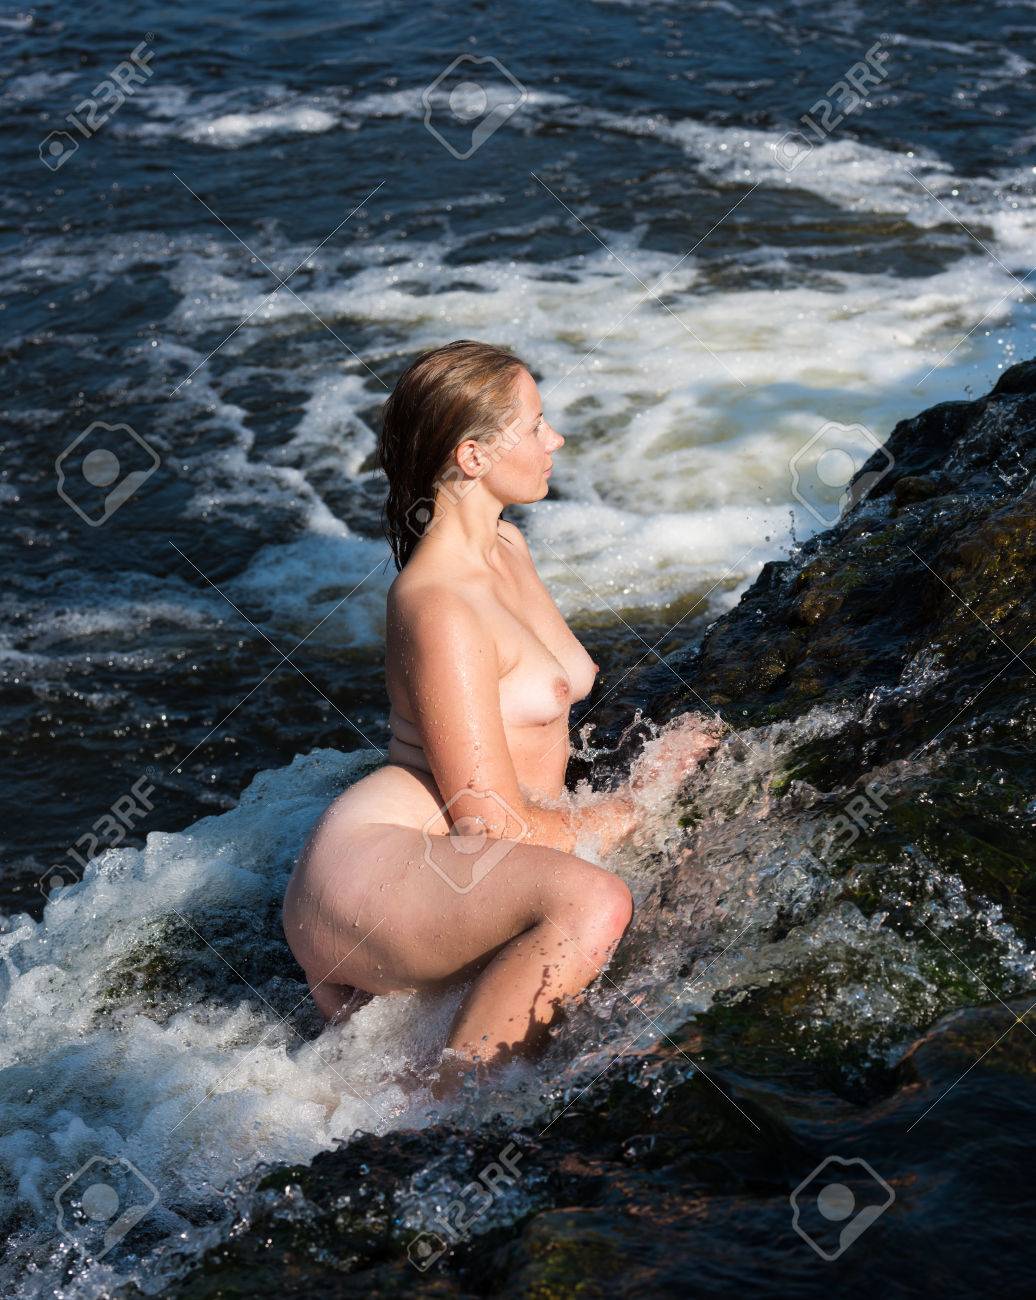 Nude waterfall naked girl